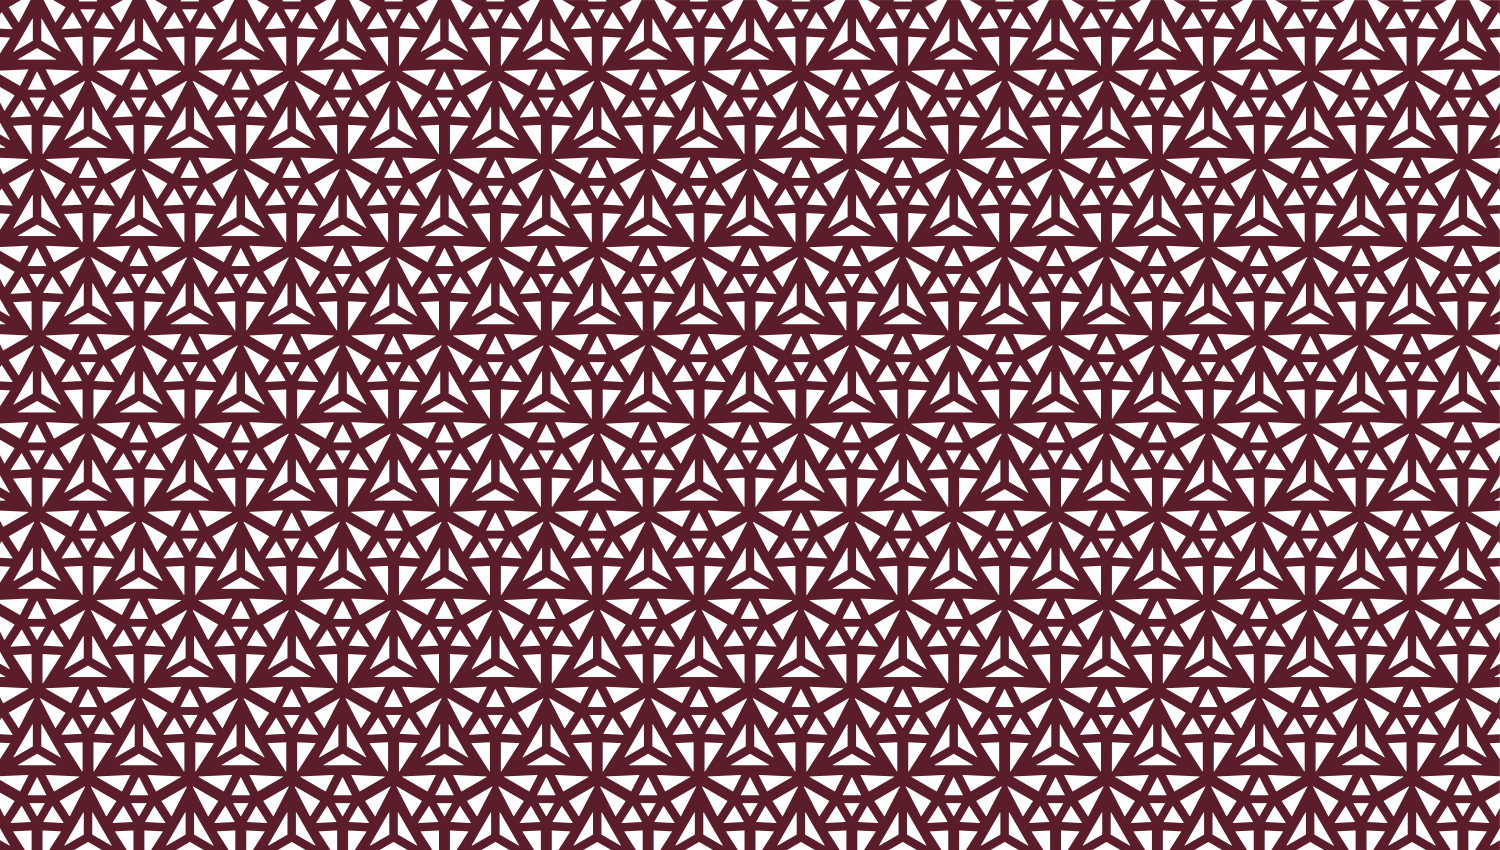 Parasoleil™ Sierpinski© pattern displayed with a burgundy color overlay